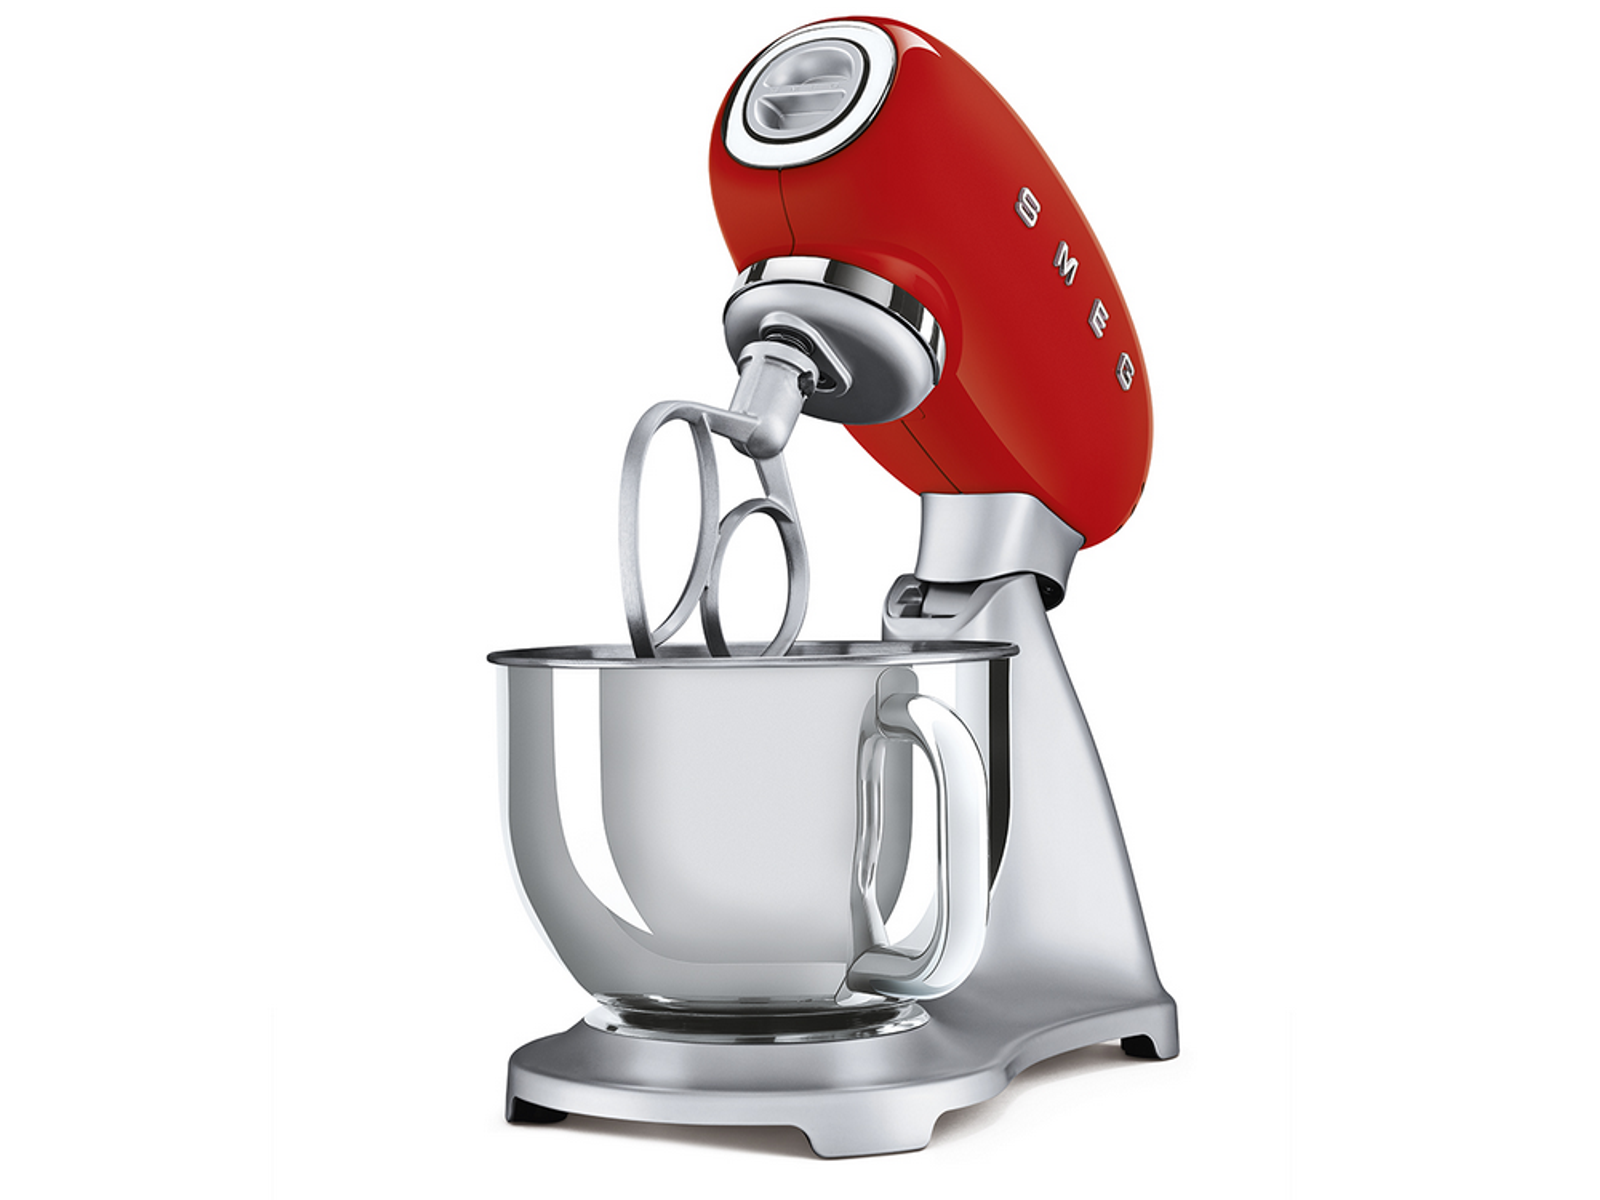 SMEG Smeg SMF02RDEU Design Rot Rot (800 Watt) Küchenmaschine 50\'s Küchenmaschine